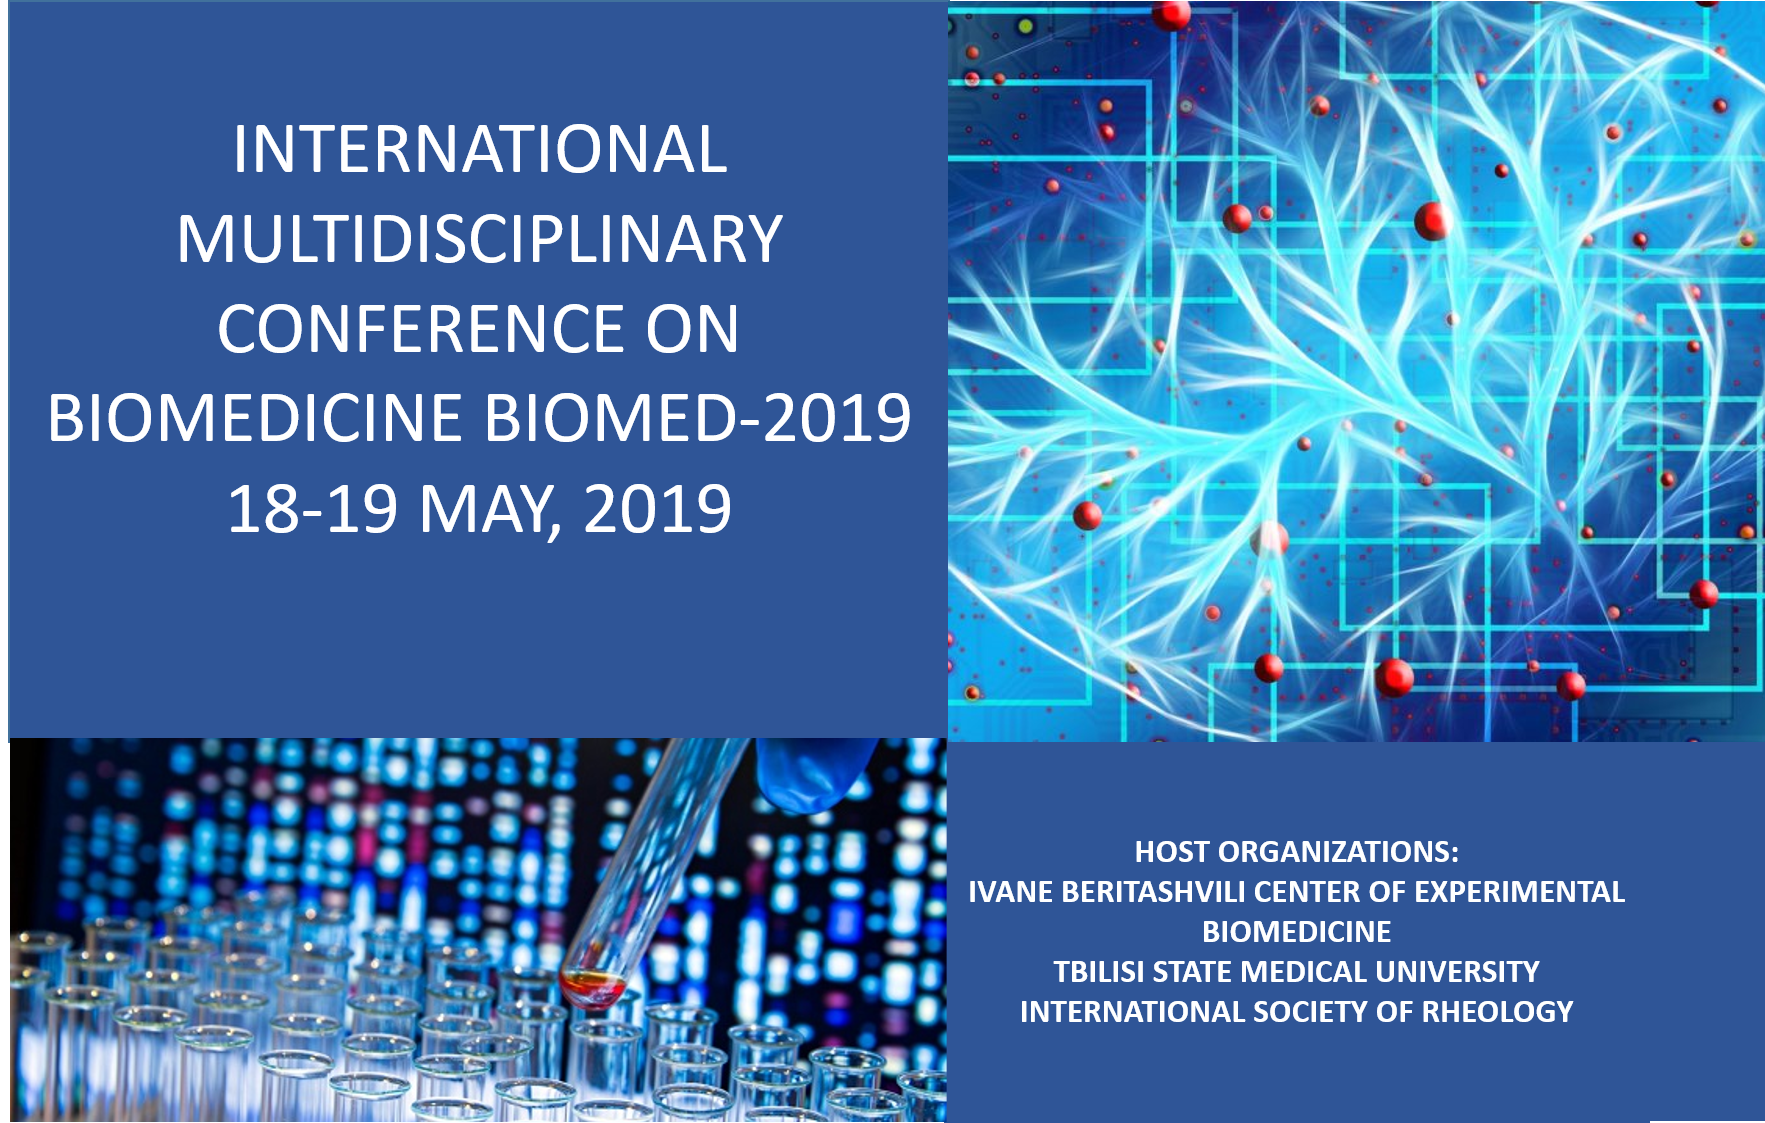 nternational Multidisciplinary Conference on Biomedicine - Biomed - 2019 image